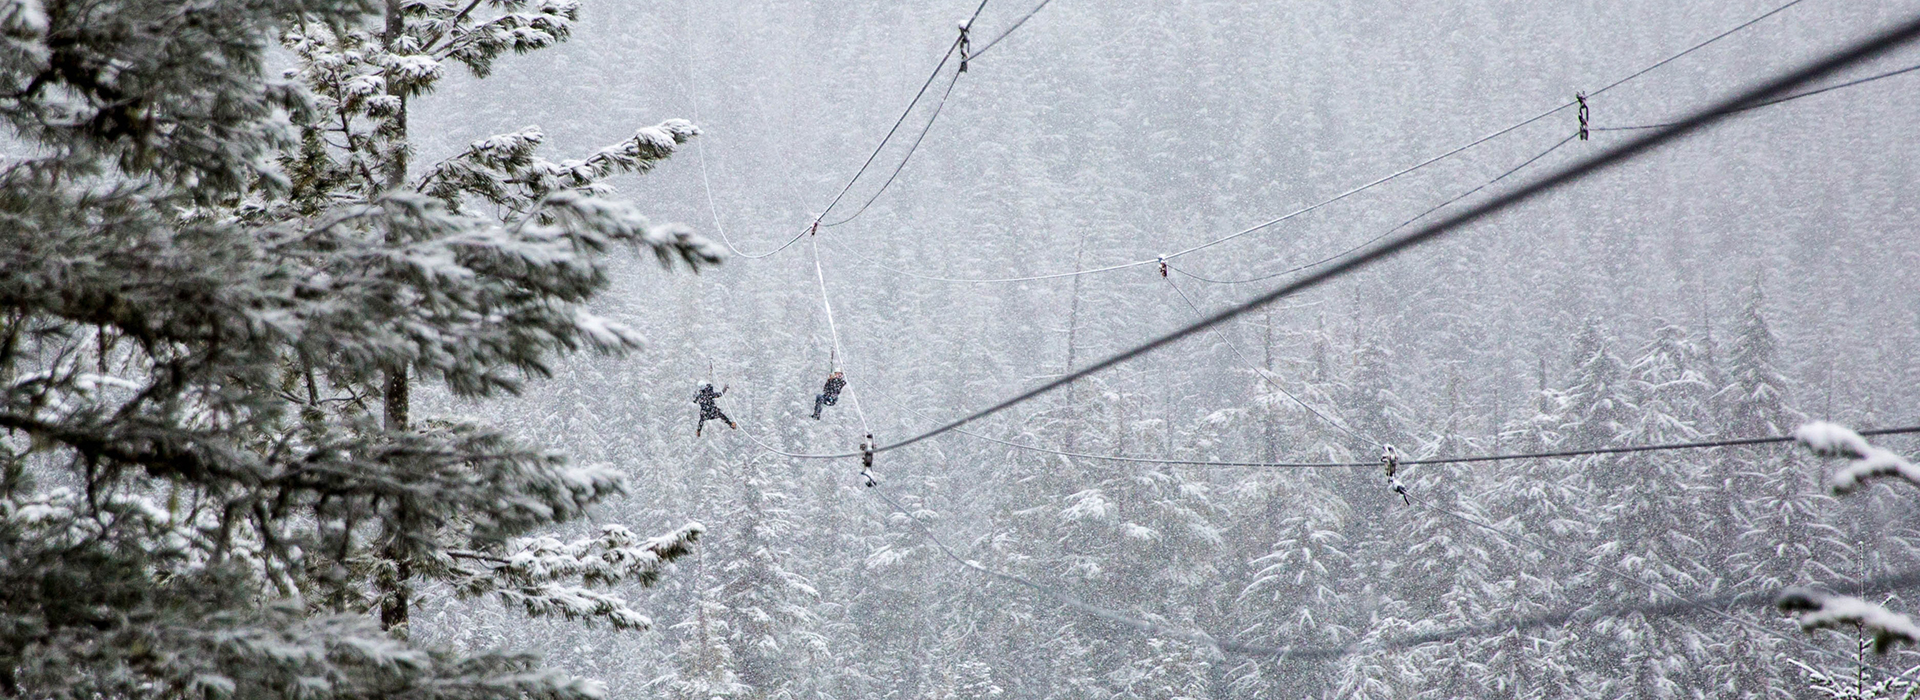 Winter Ziplining in Whistler, BC | Crystal Lodge